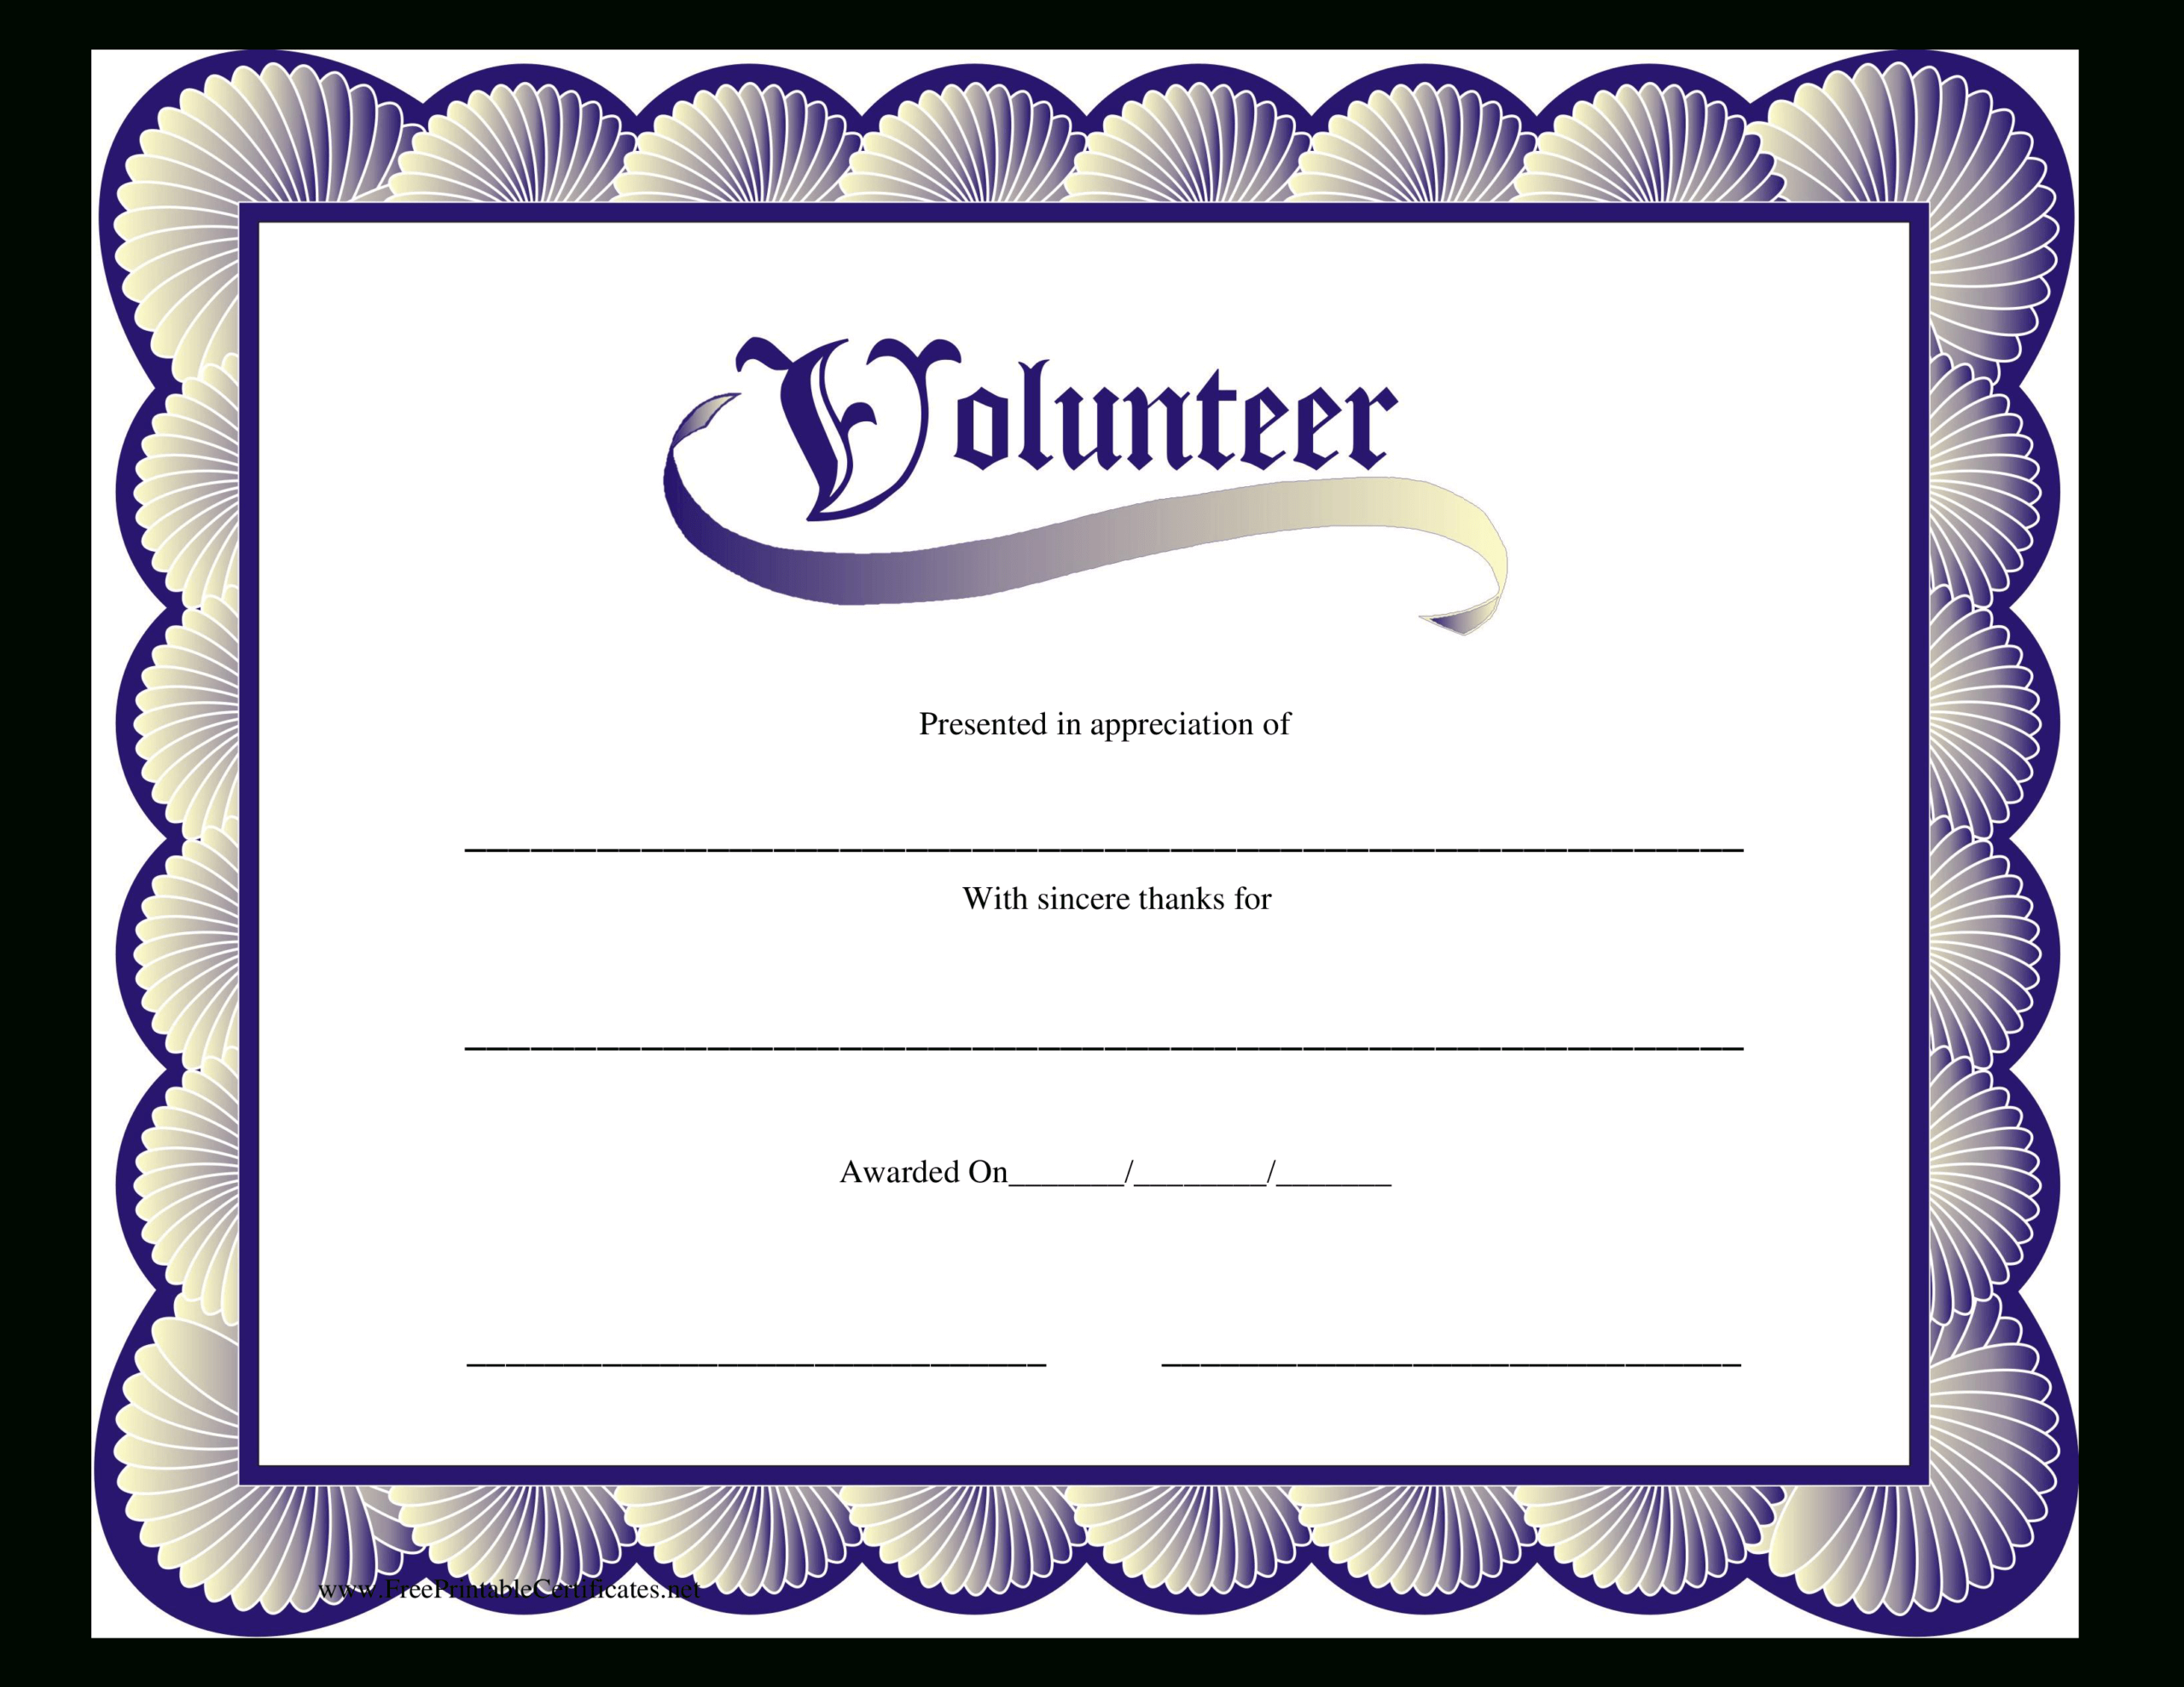 Volunteer Certificate | Templates At Allbusinesstemplates Pertaining To Volunteer Certificate Template